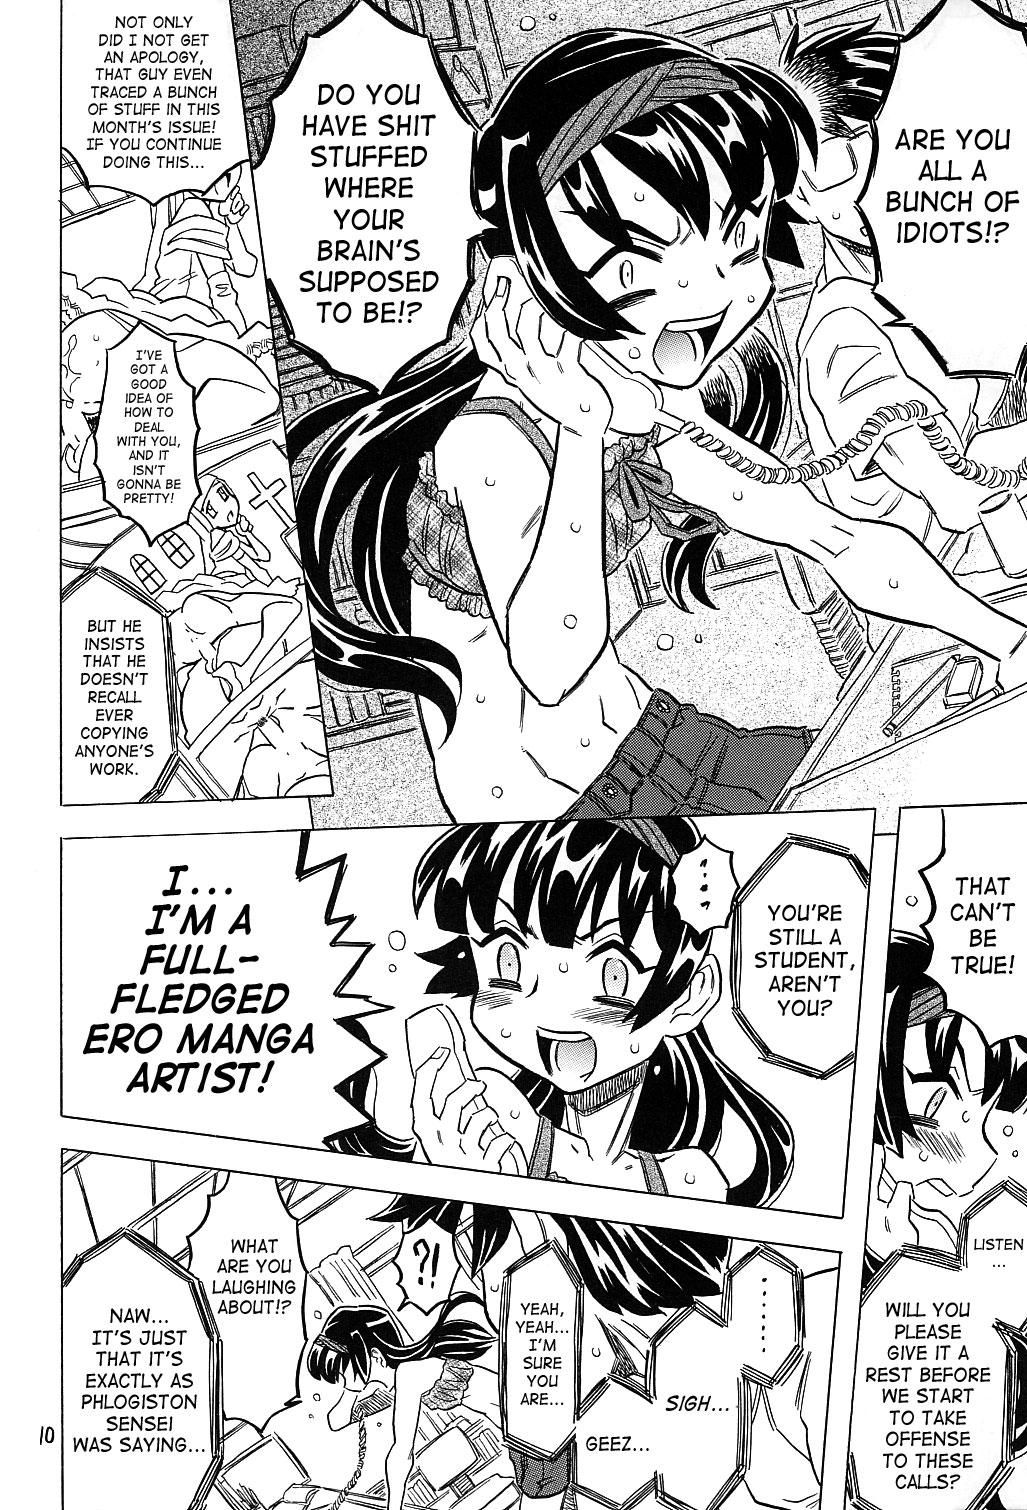 Female Ero Manga Artist Scorned 8